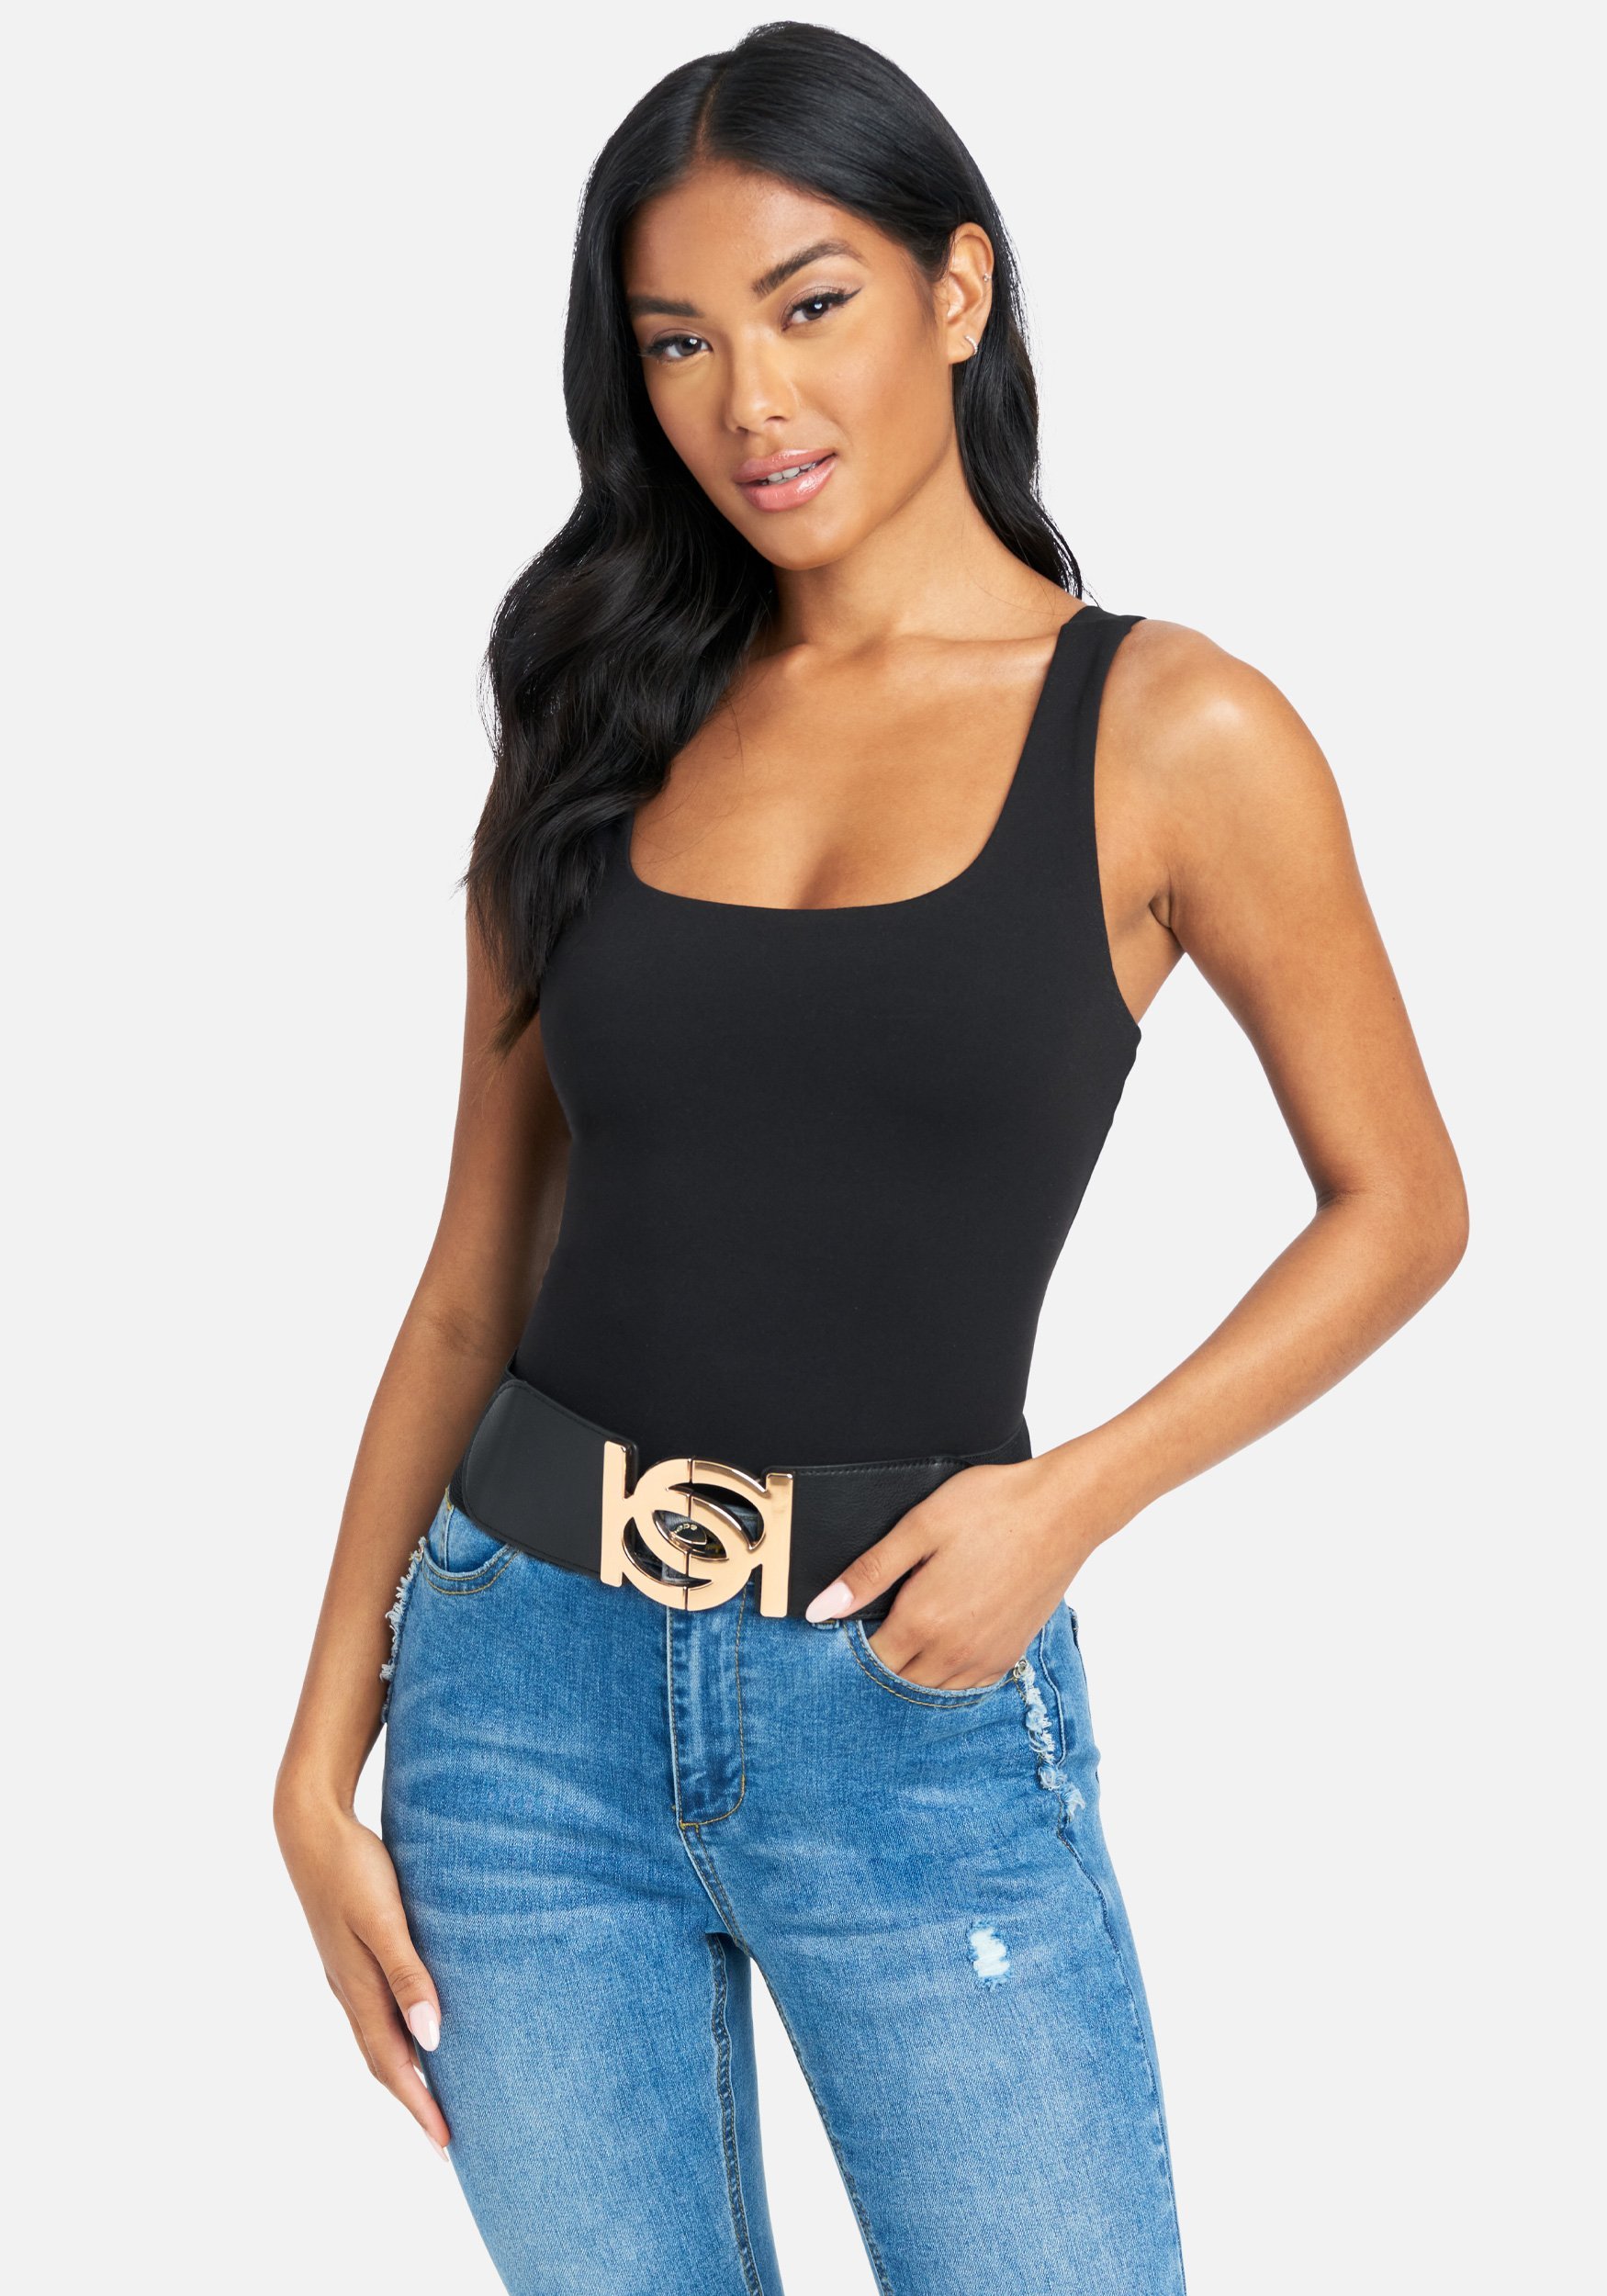 Women's Gold Bebe Logo Stretch Belt, Size S/M in Black Leather